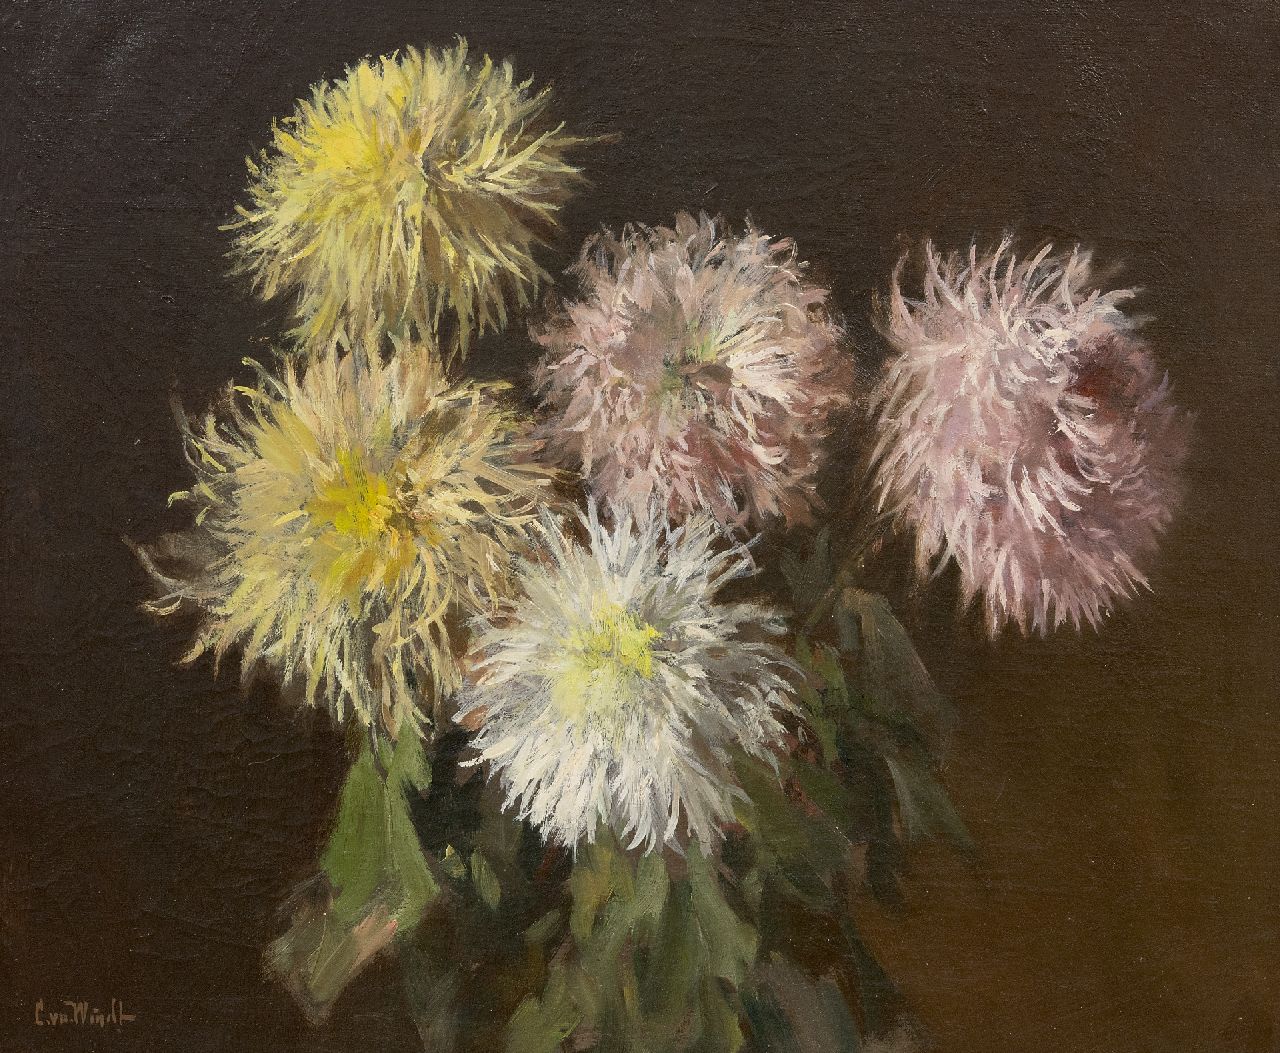 Windt Ch. van der | Christophe 'Chris' van der Windt | Paintings offered for sale | Chrysanthemums, oil on canvas 45.2 x 55.3 cm, signed l.l.